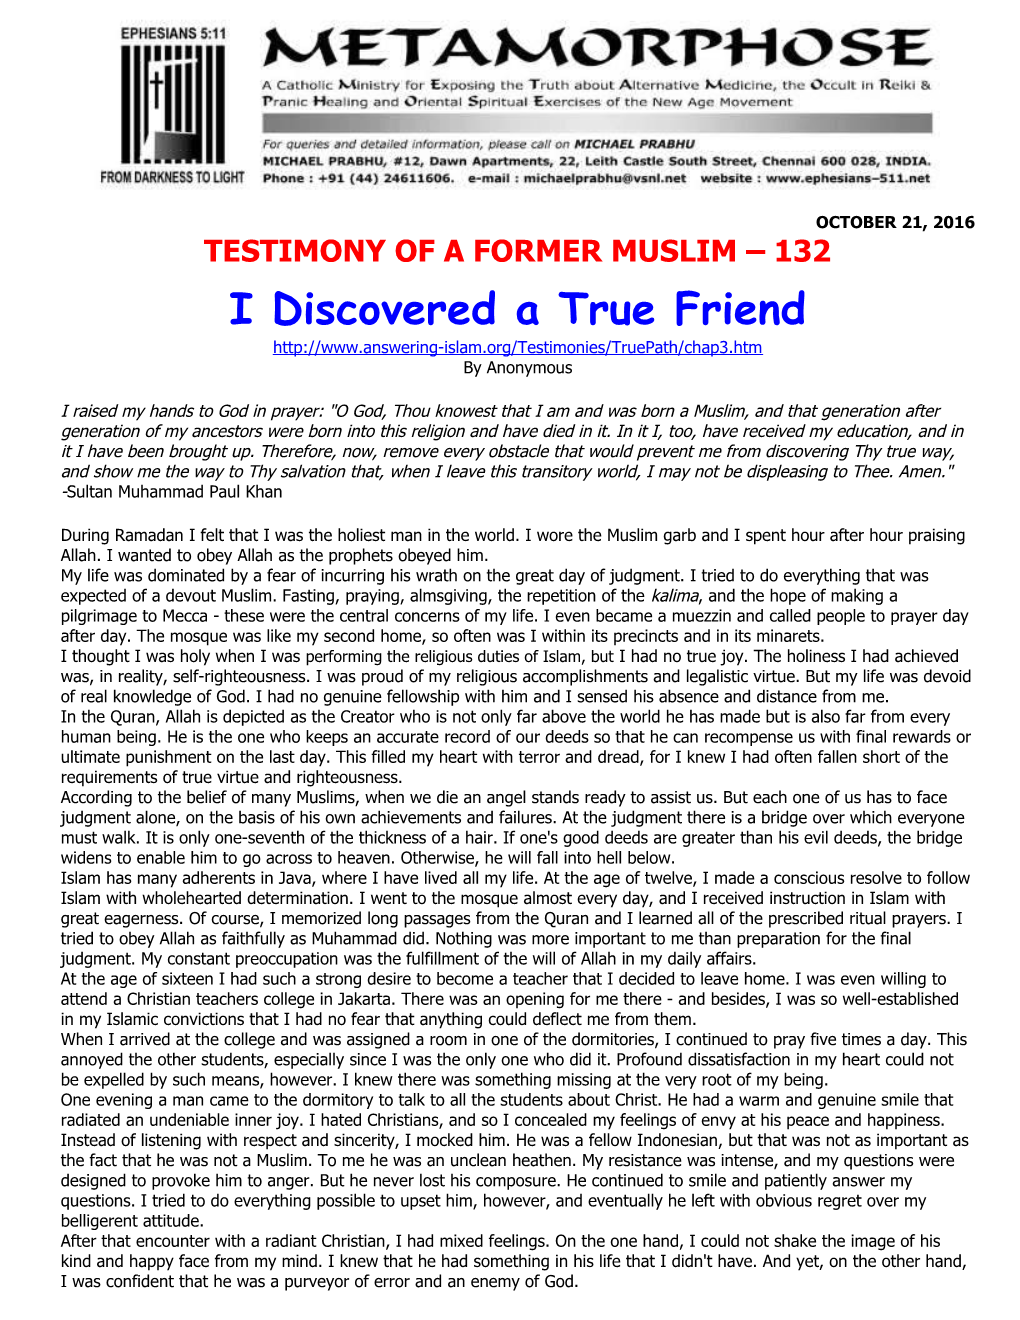 Testimony of a Former Muslim 132